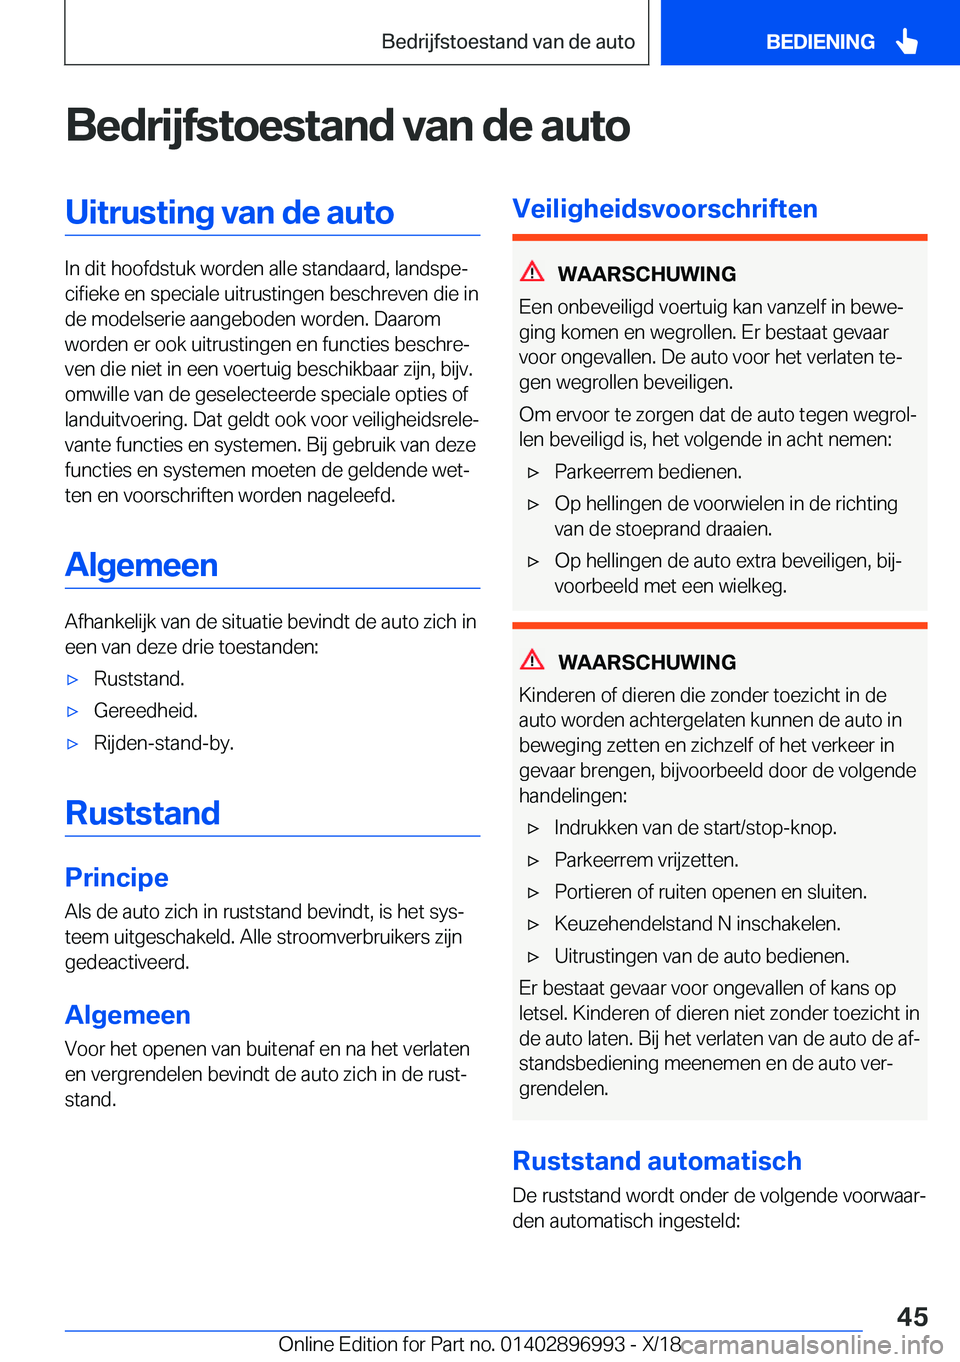 BMW Z4 2019  Instructieboekjes (in Dutch) �B�e�d�r�i�j�f�s�t�o�e�s�t�a�n�d��v�a�n��d�e��a�u�t�o�U�i�t�r�u�s�t�i�n�g��v�a�n��d�e��a�u�t�o
�I�n��d�i�t��h�o�o�f�d�s�t�u�k��w�o�r�d�e�n��a�l�l�e��s�t�a�n�d�a�a�r�d�,��l�a�n�d�s�p�ej�c�